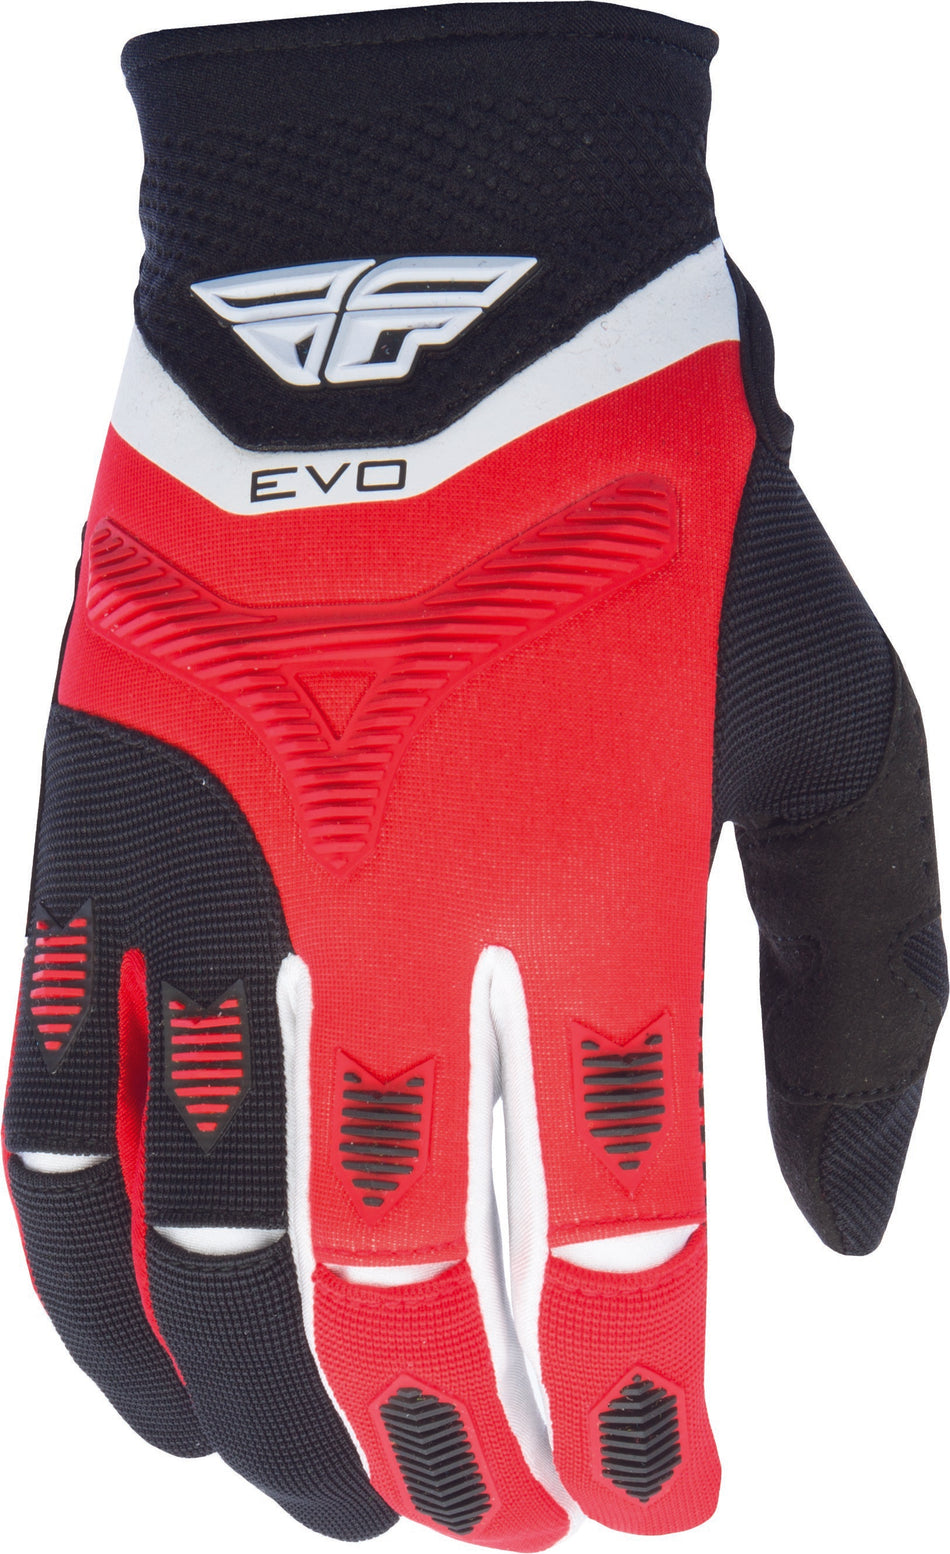 FLY RACING Evo Glove Red/Black M 370-11209